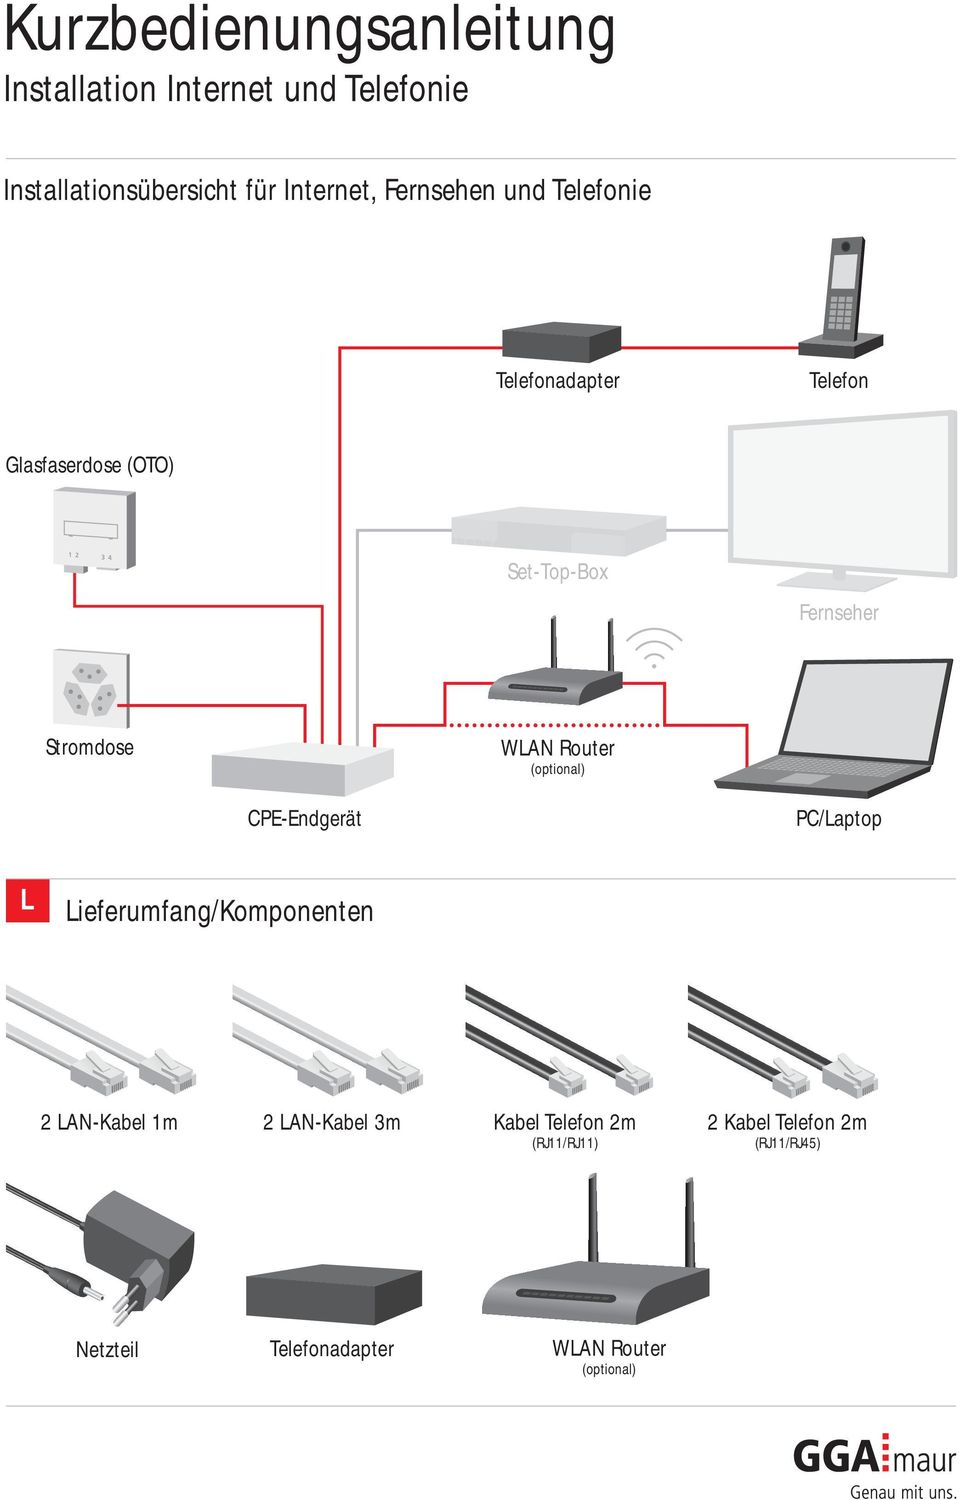 Telefon Fernseher PC/Laptop L Lieferumfang/Komponenten LAN-Kabel